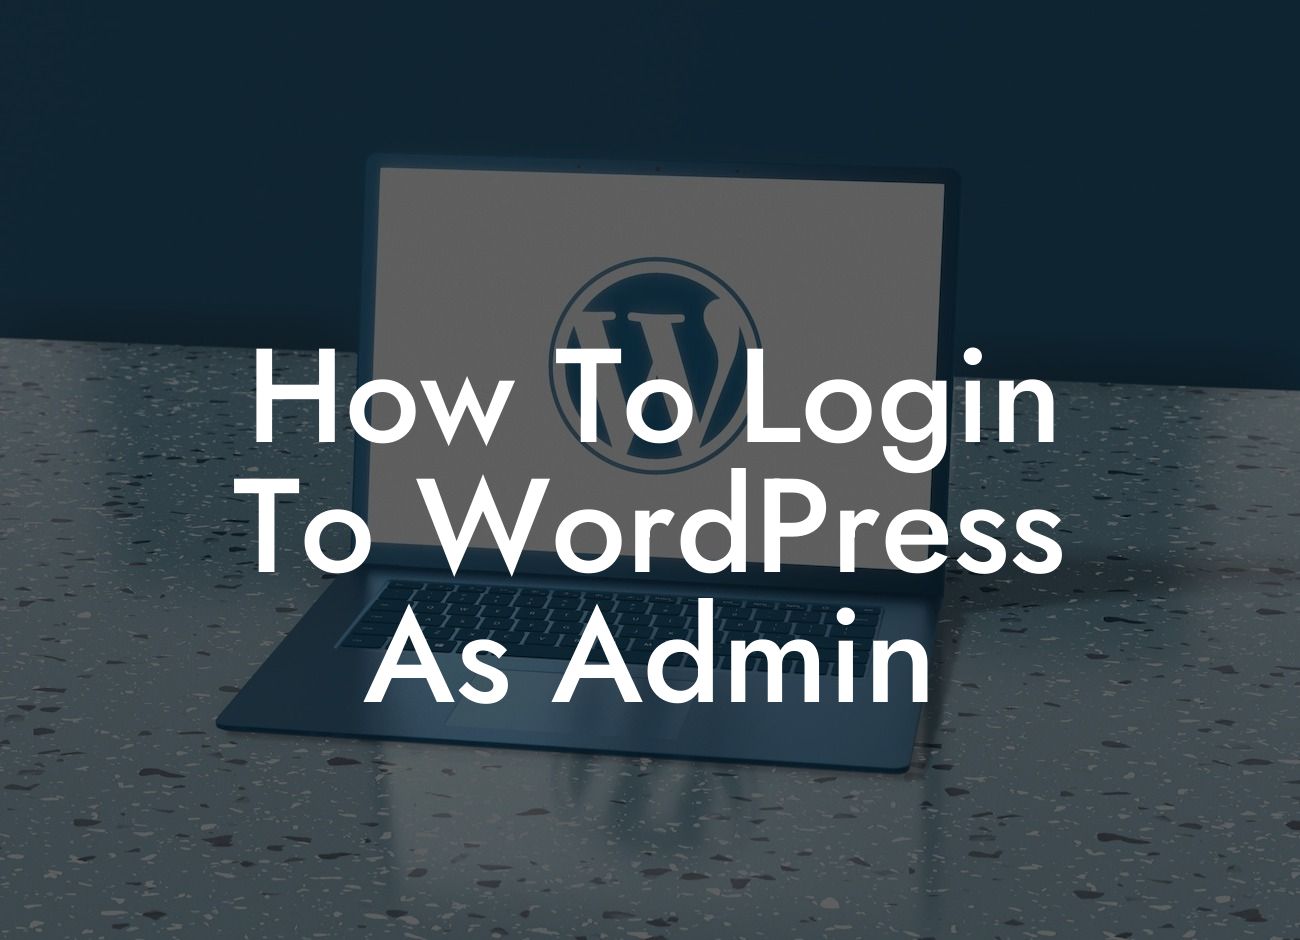 How To Login To WordPress As Admin